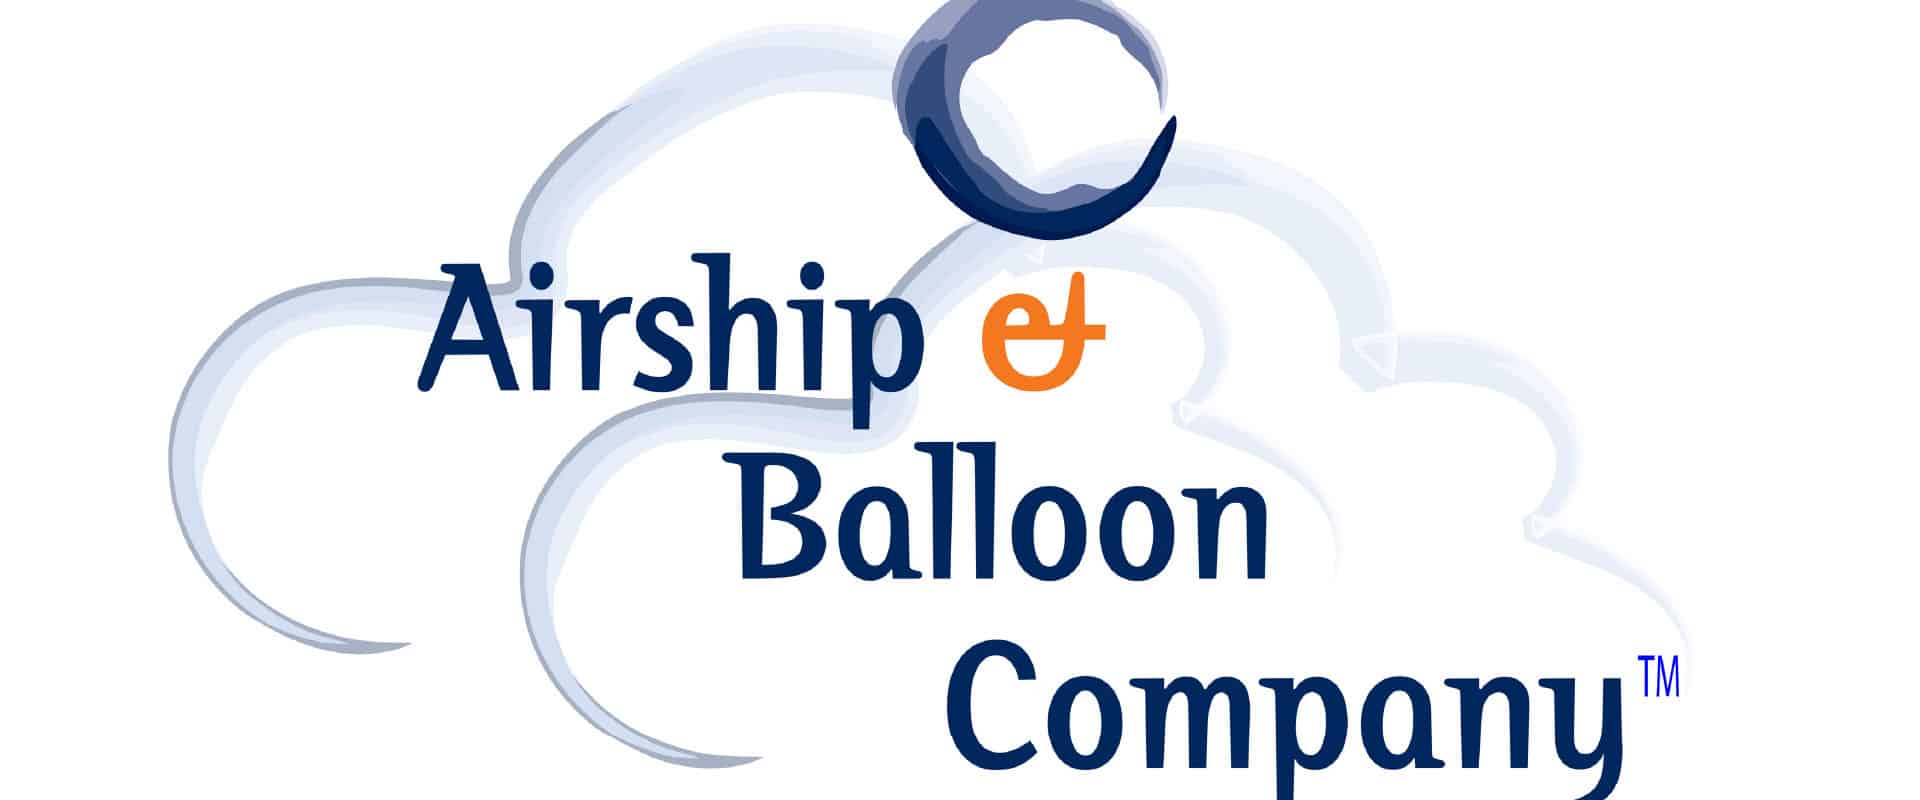 Airship & Balloon Company Ltd. in UK